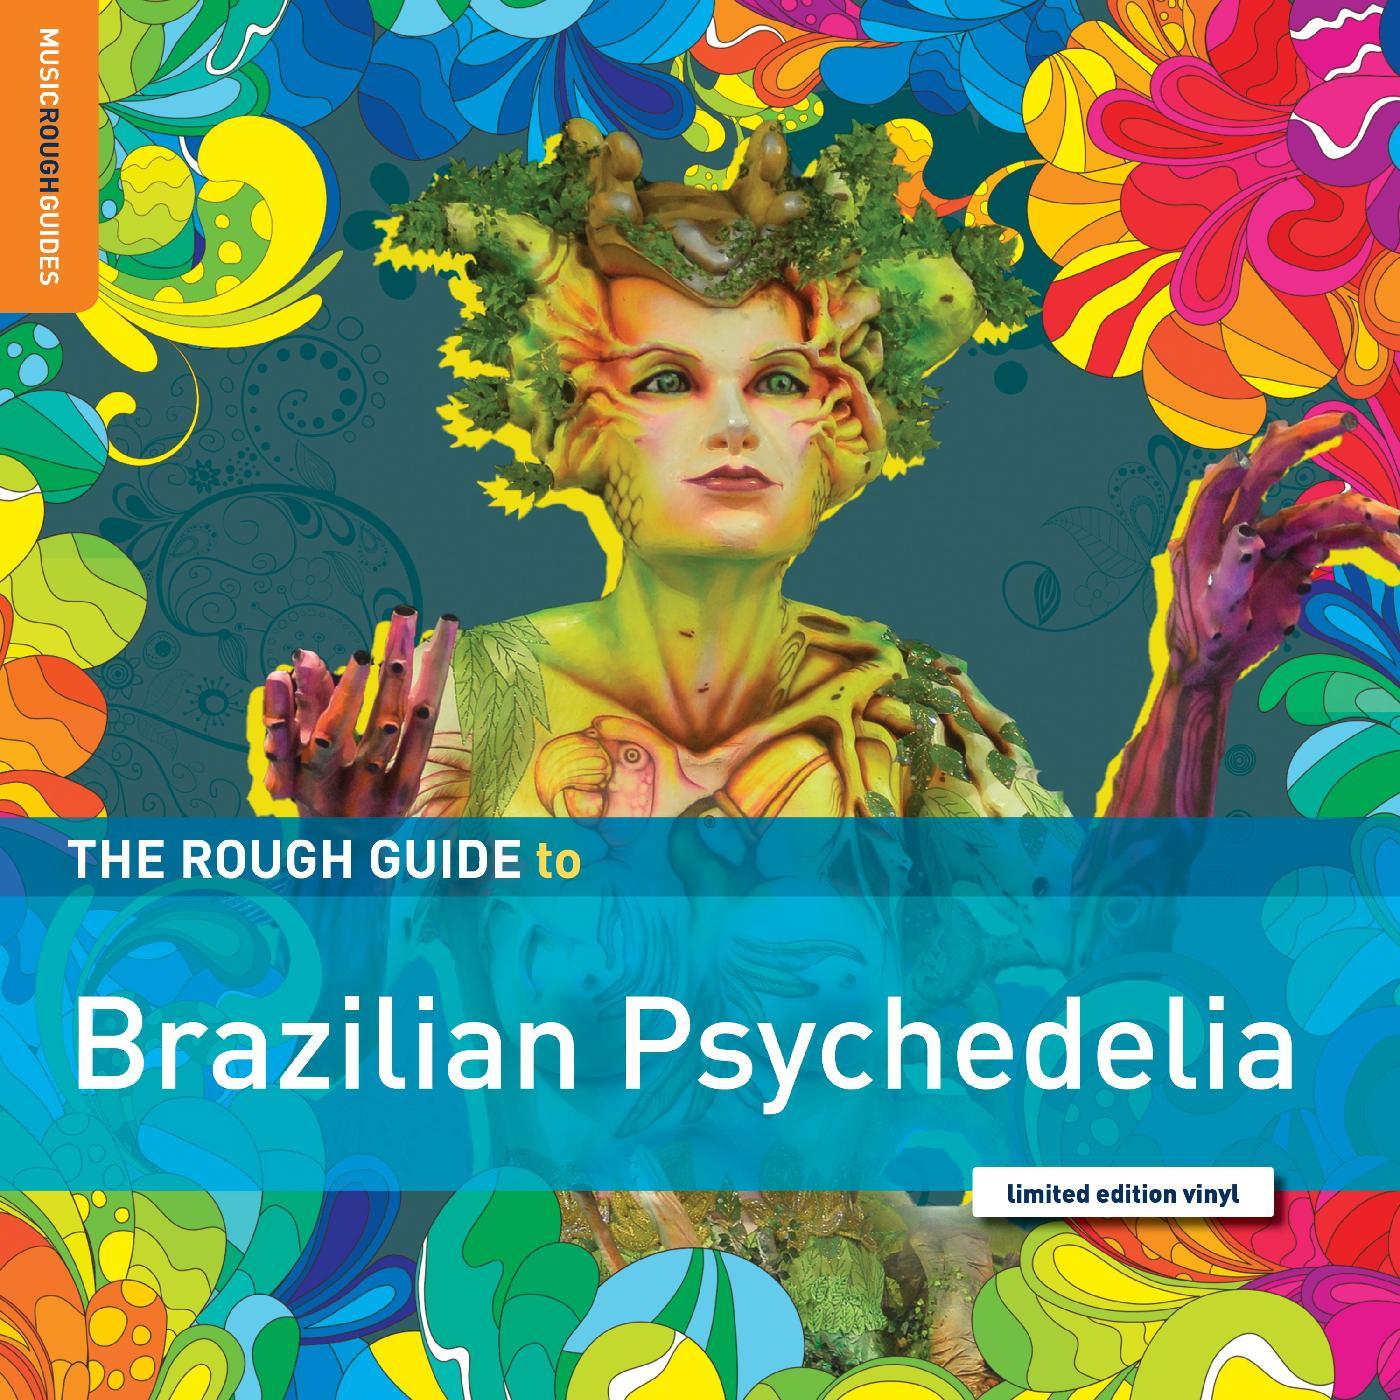 V/A - ROUGH GUIDE TO BRAZILIAN PSYCHEDELIA Vinyl LP